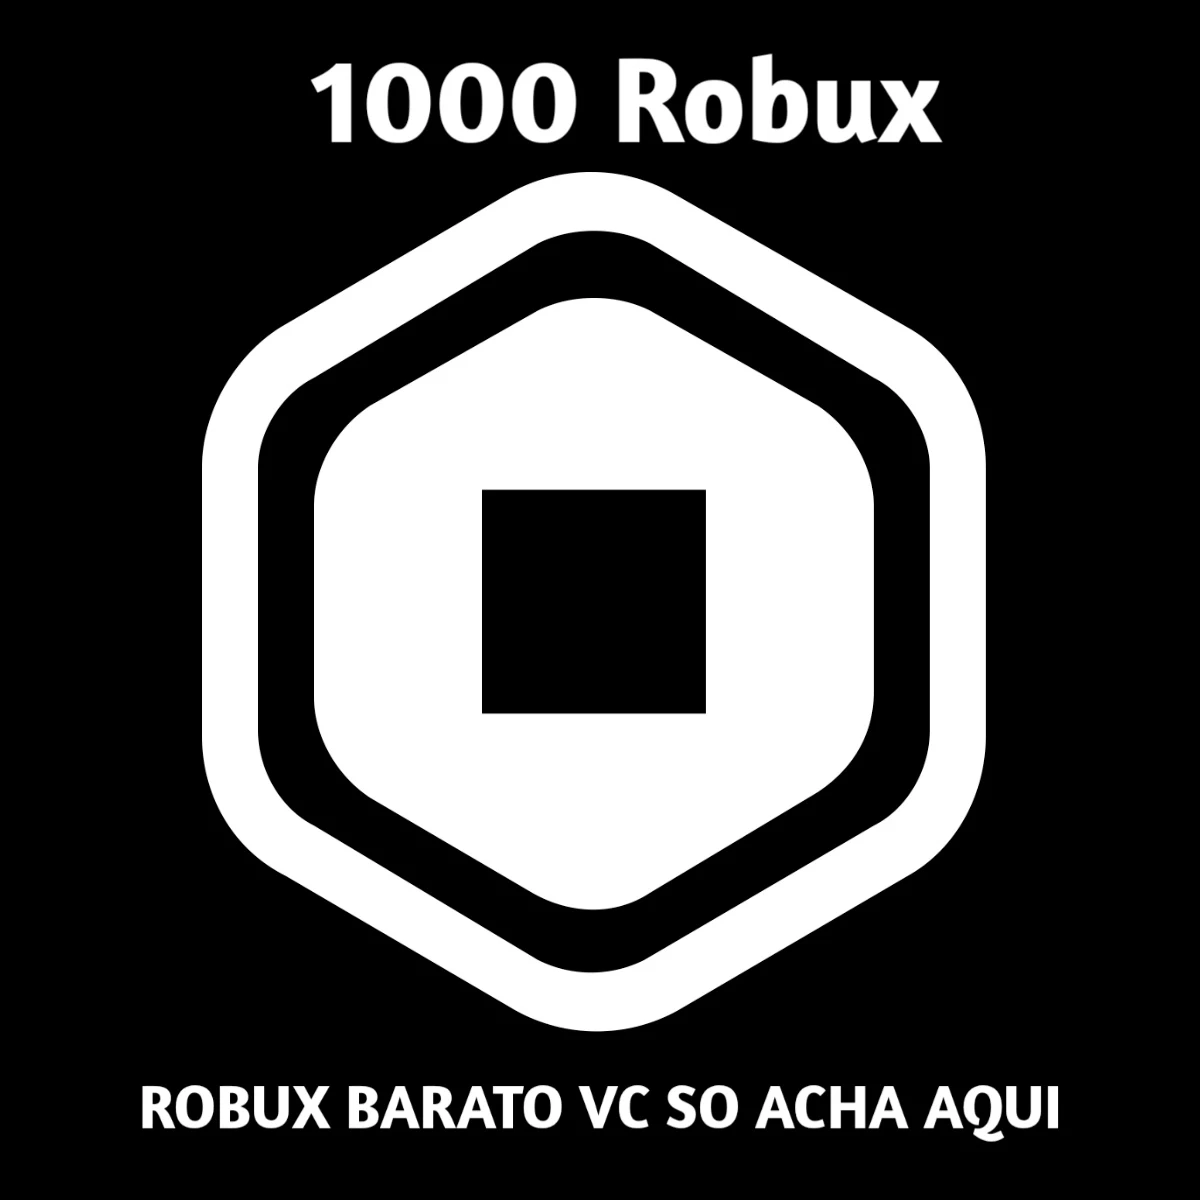 ggammepass para 100 robux gratis - Roblox